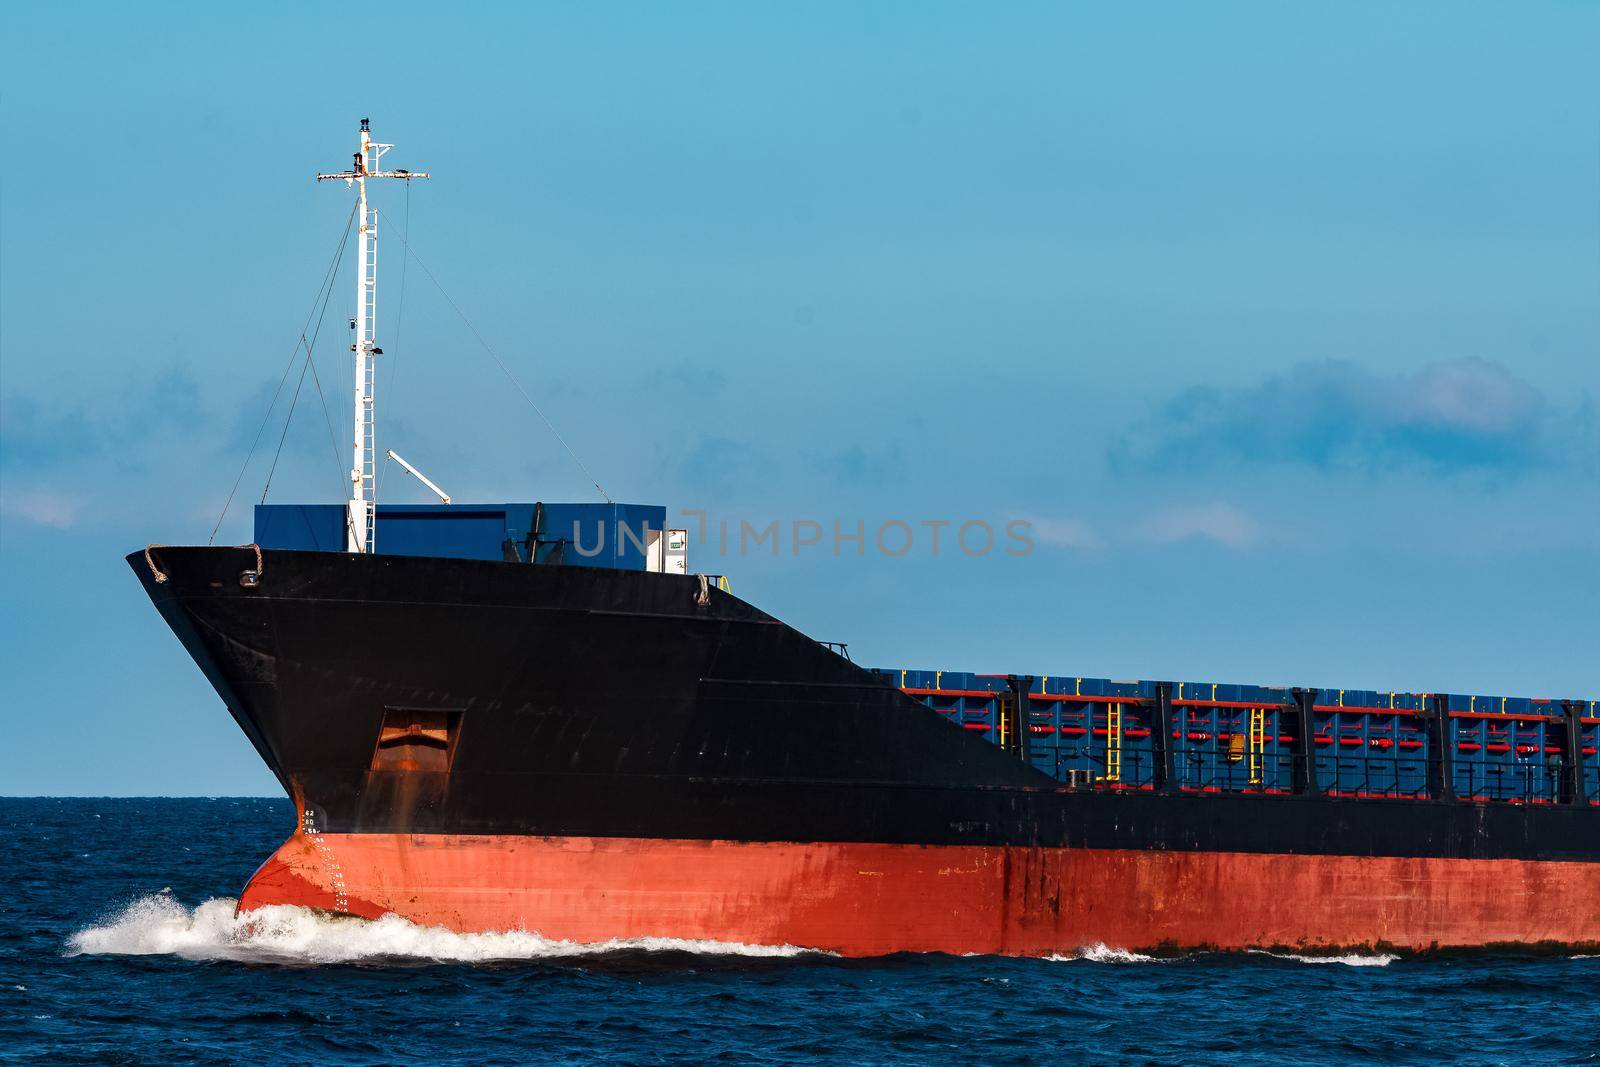 Black bulker ship. Logistics and merchandise transportations